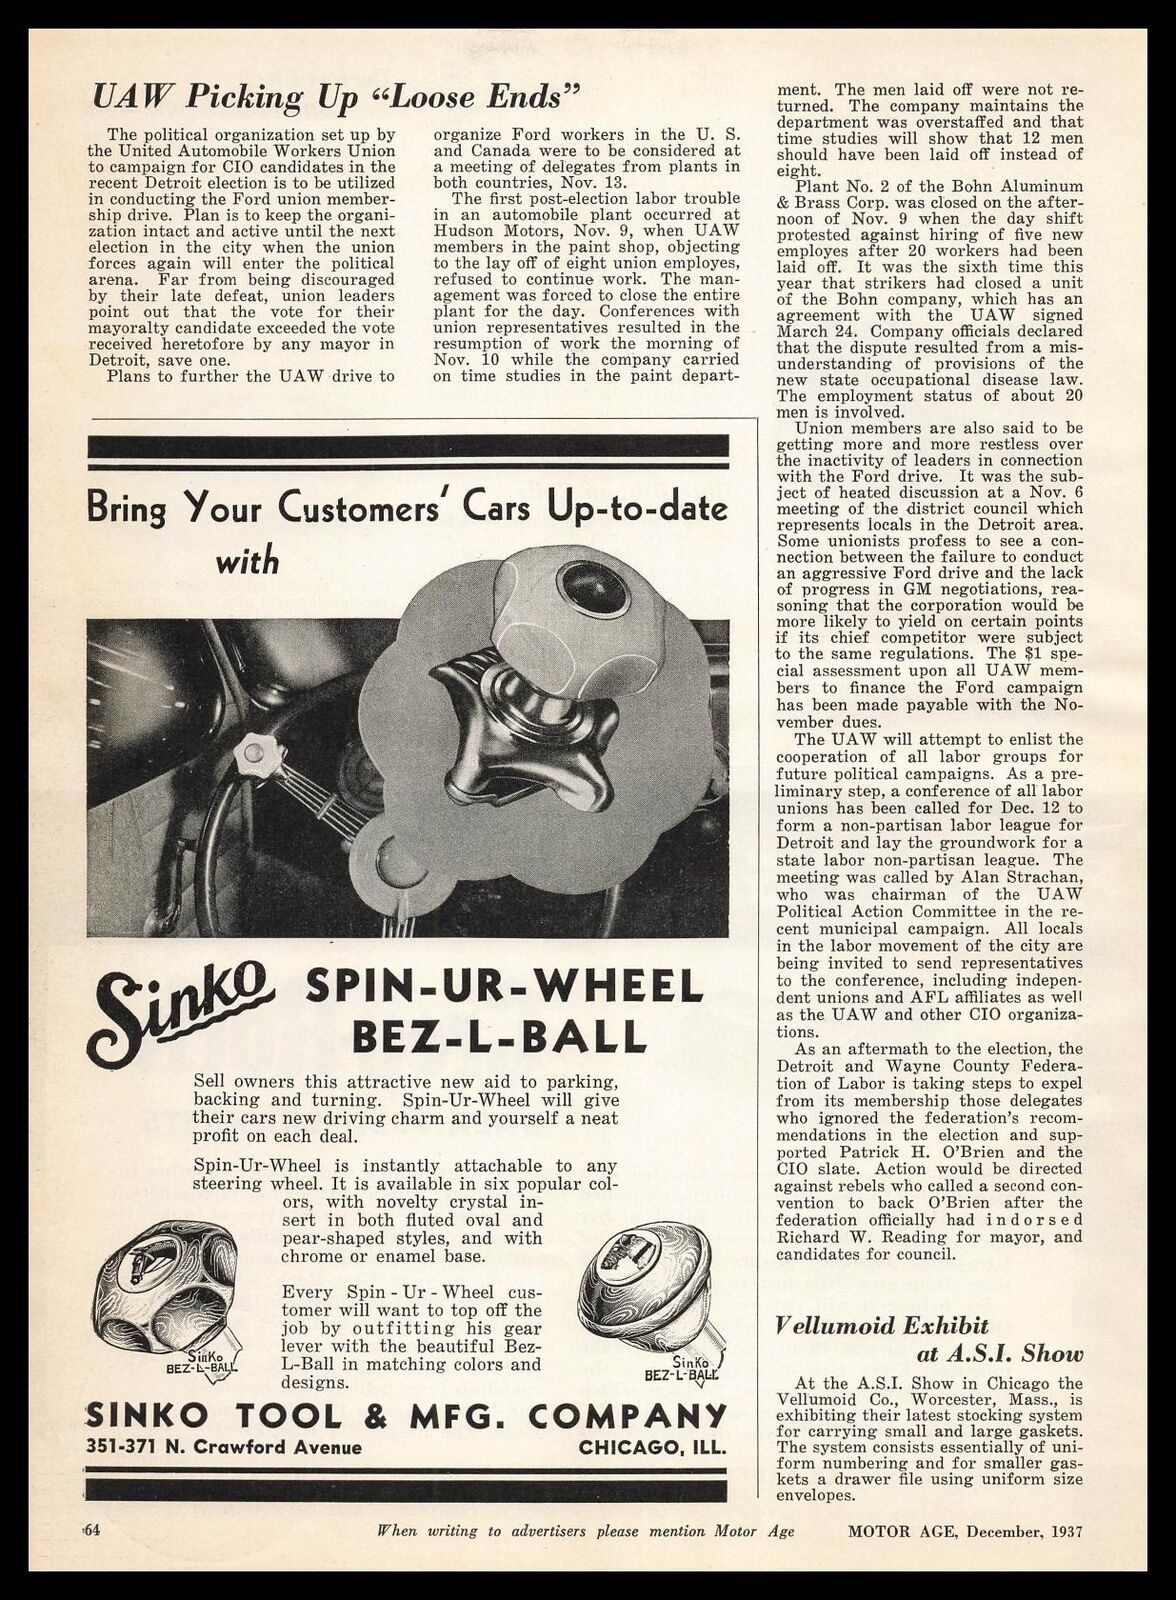 1937 Sinko Tool & Mfg Chicago Illinois Spin-Ur-Wheel Bez-L-Ball Vintage Print Ad